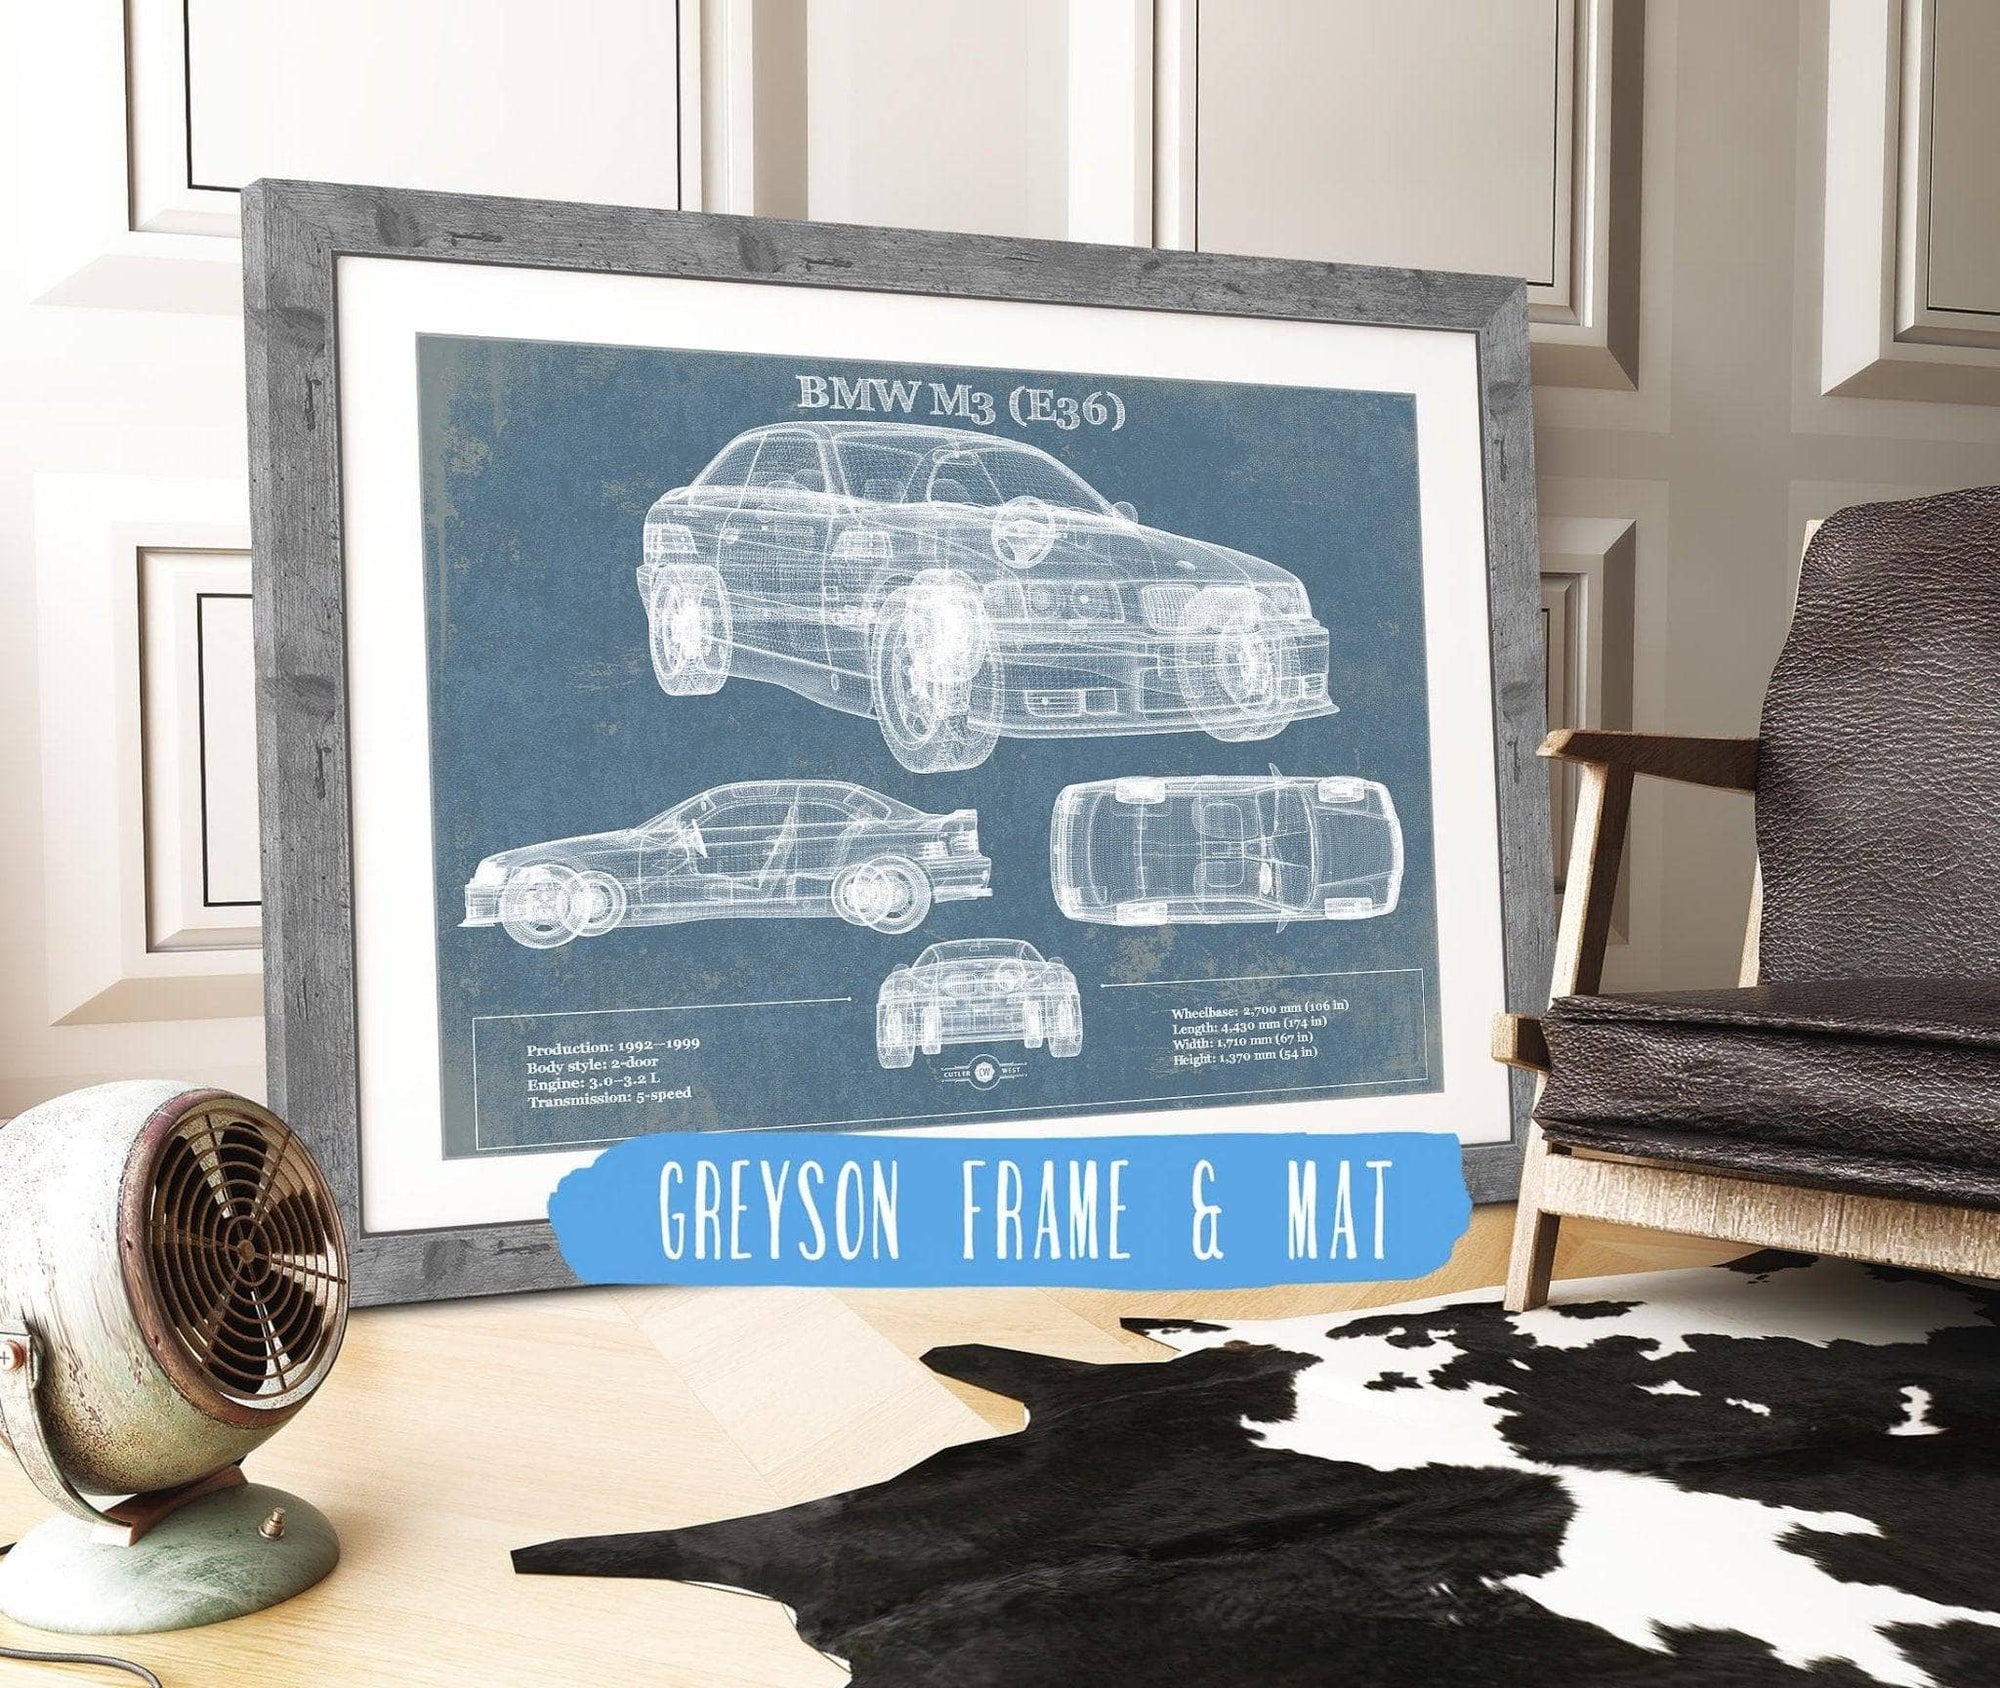 Cutler West Vehicle Collection 14" x 11" / Greyson Frame & Mat BMW M3 (E36) Vintage Blueprint Auto Print 833110078_47689